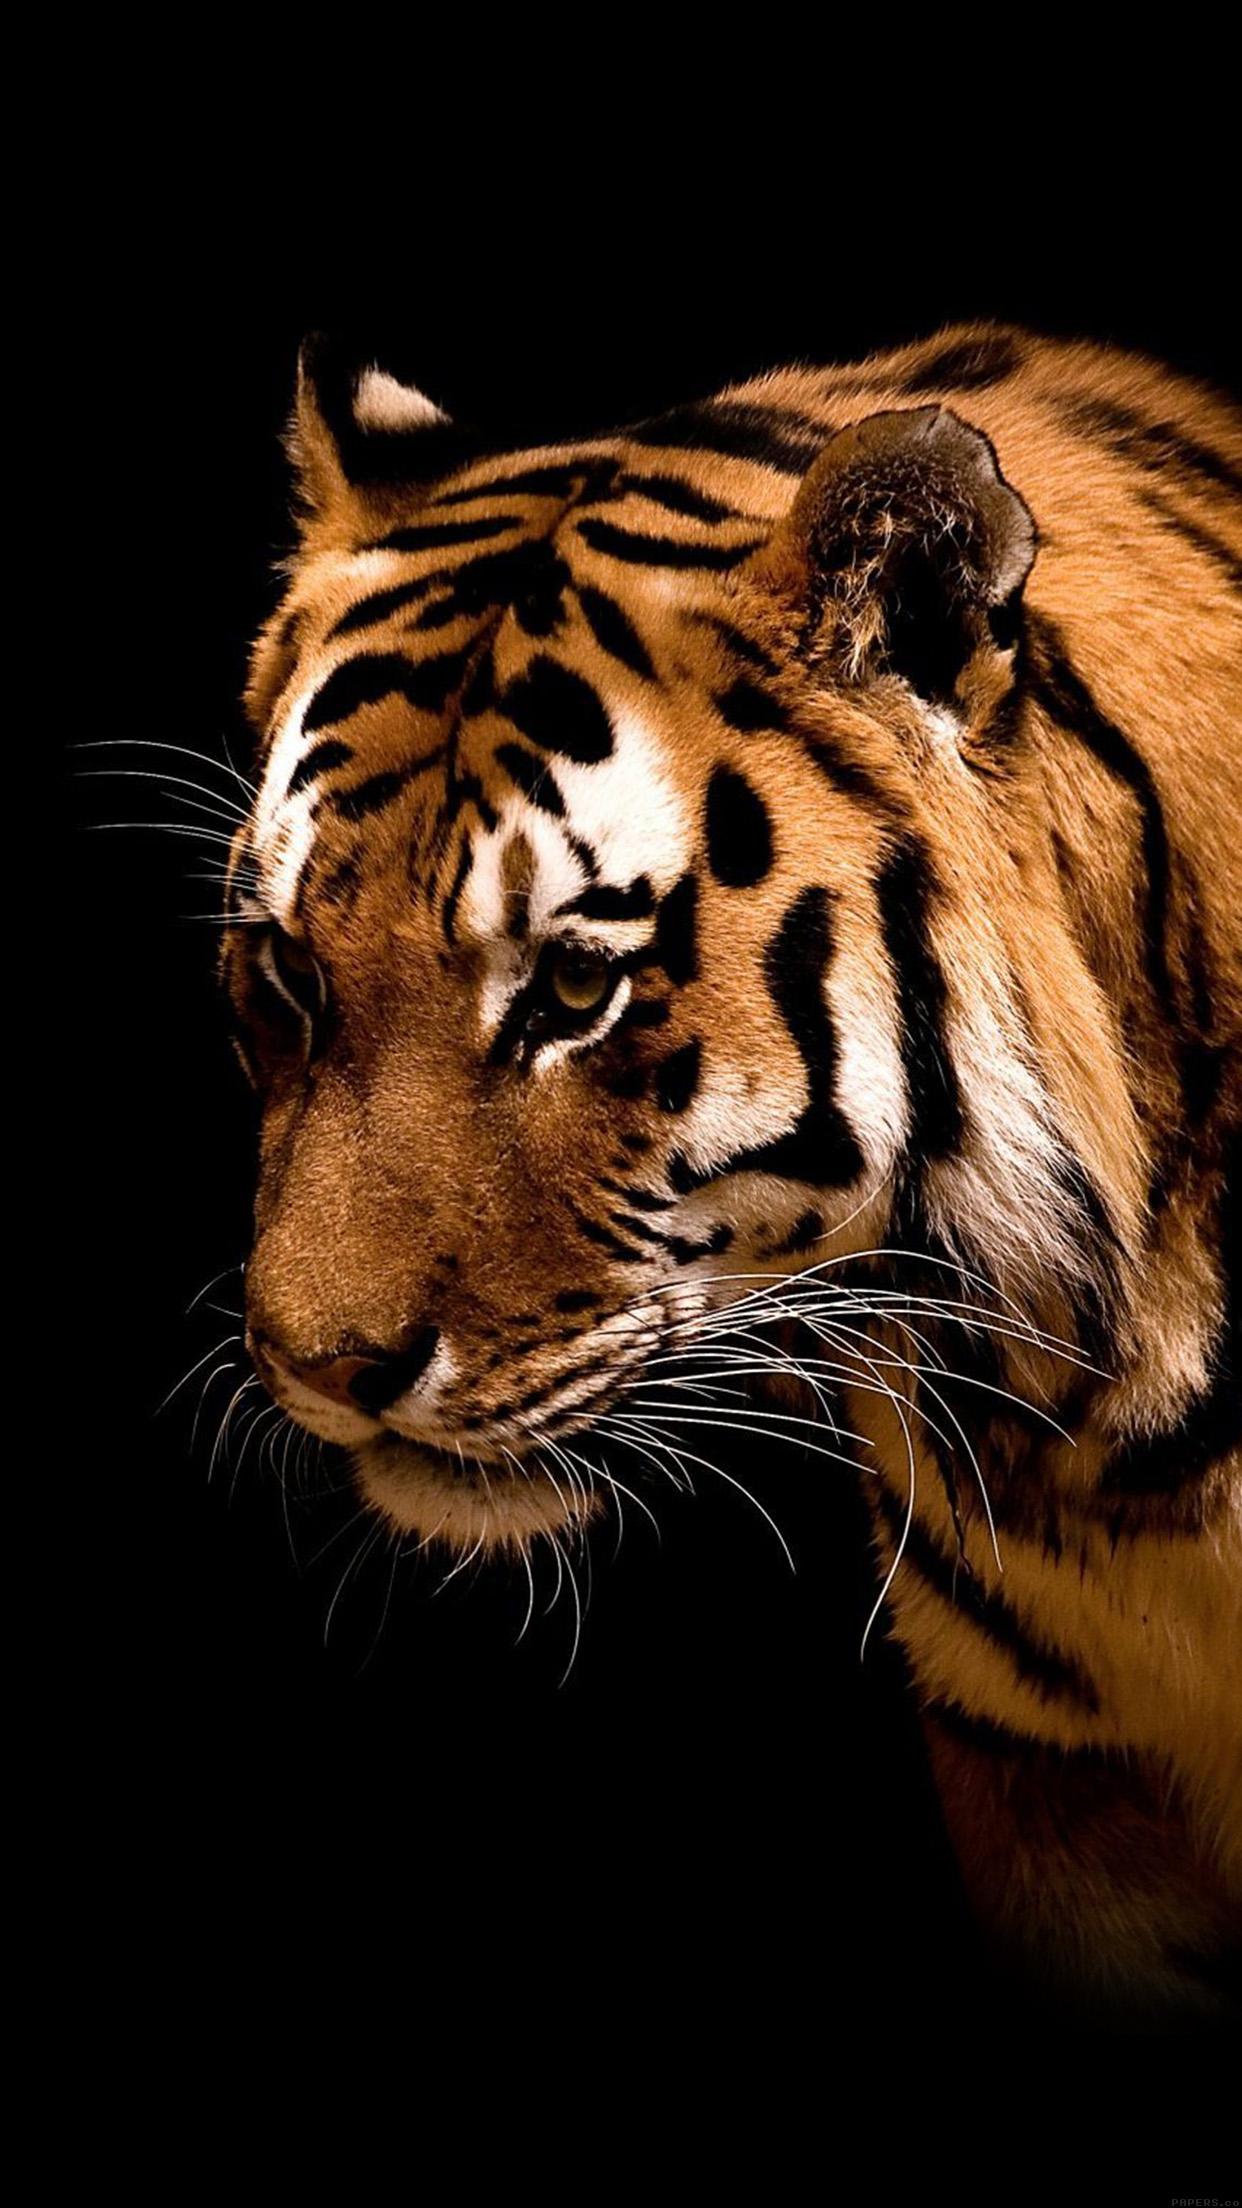 Tiger Jk Dark Animal Love Nature Android wallpaper